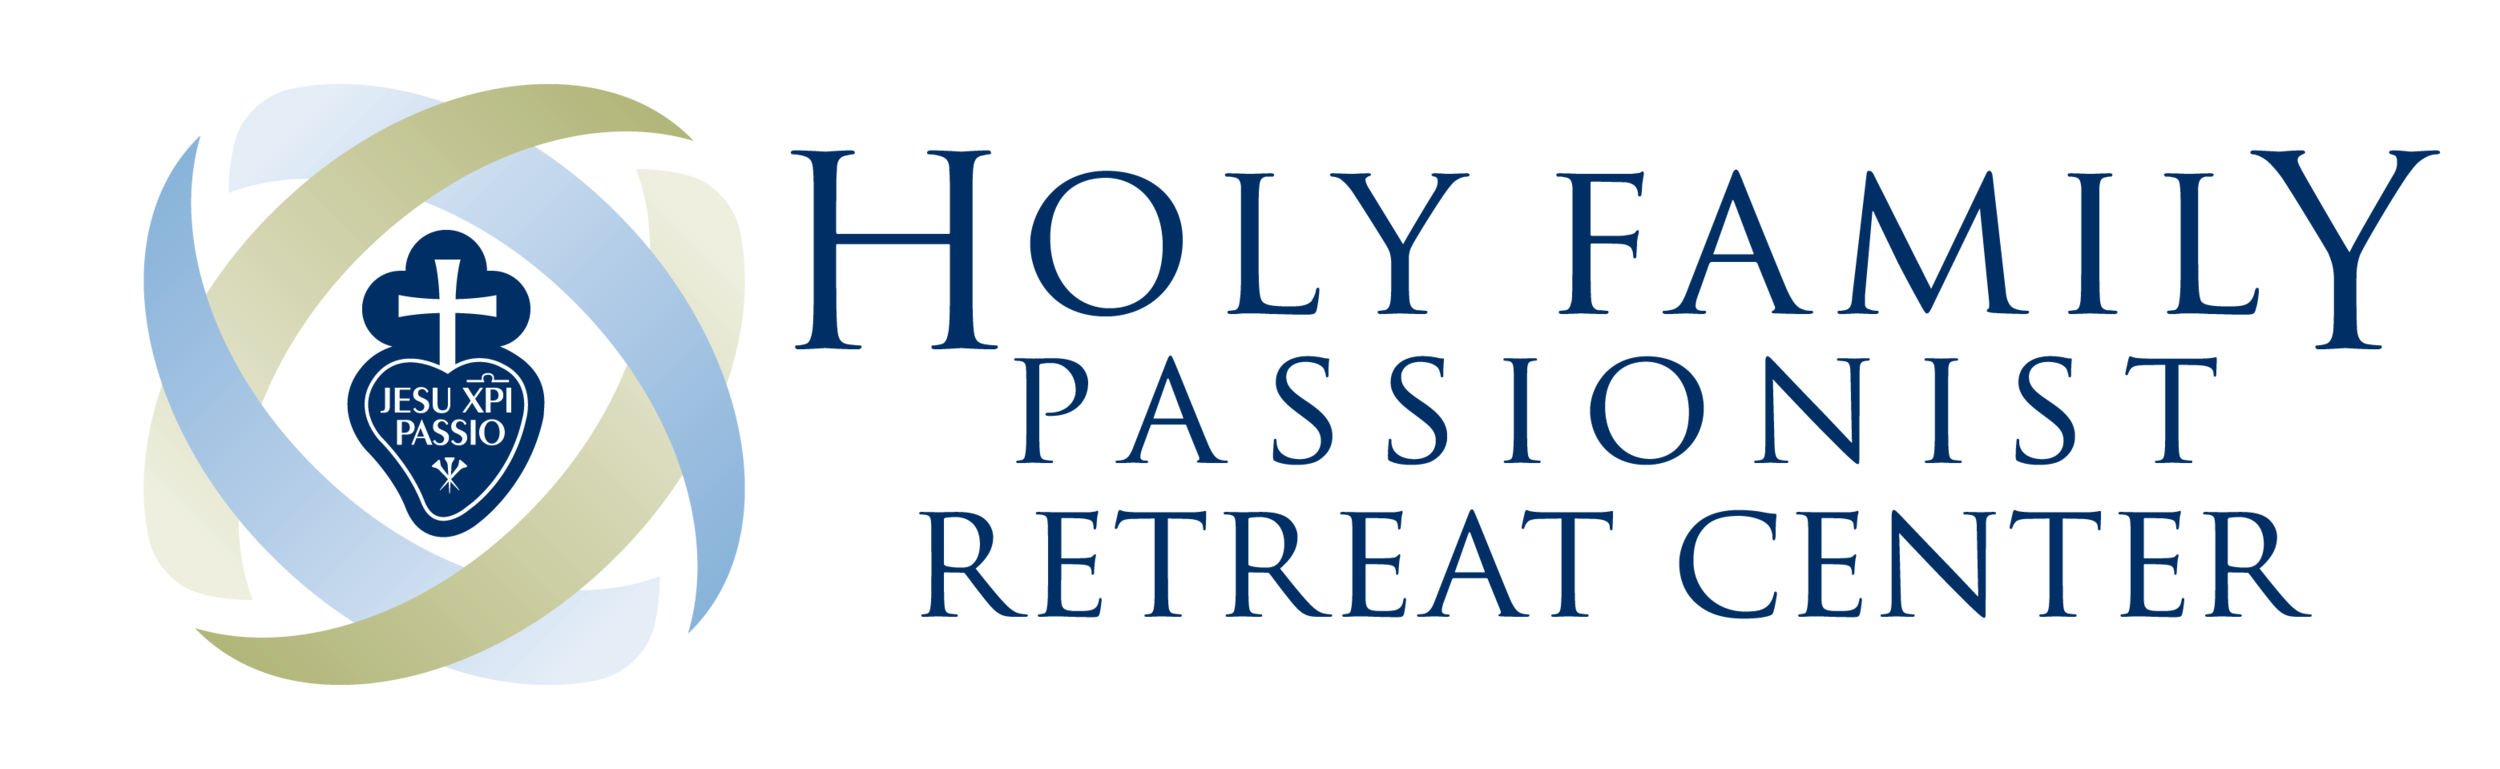 CT&#39;s Catholic Retreat Center - Holy Family Passionist Retreat Center